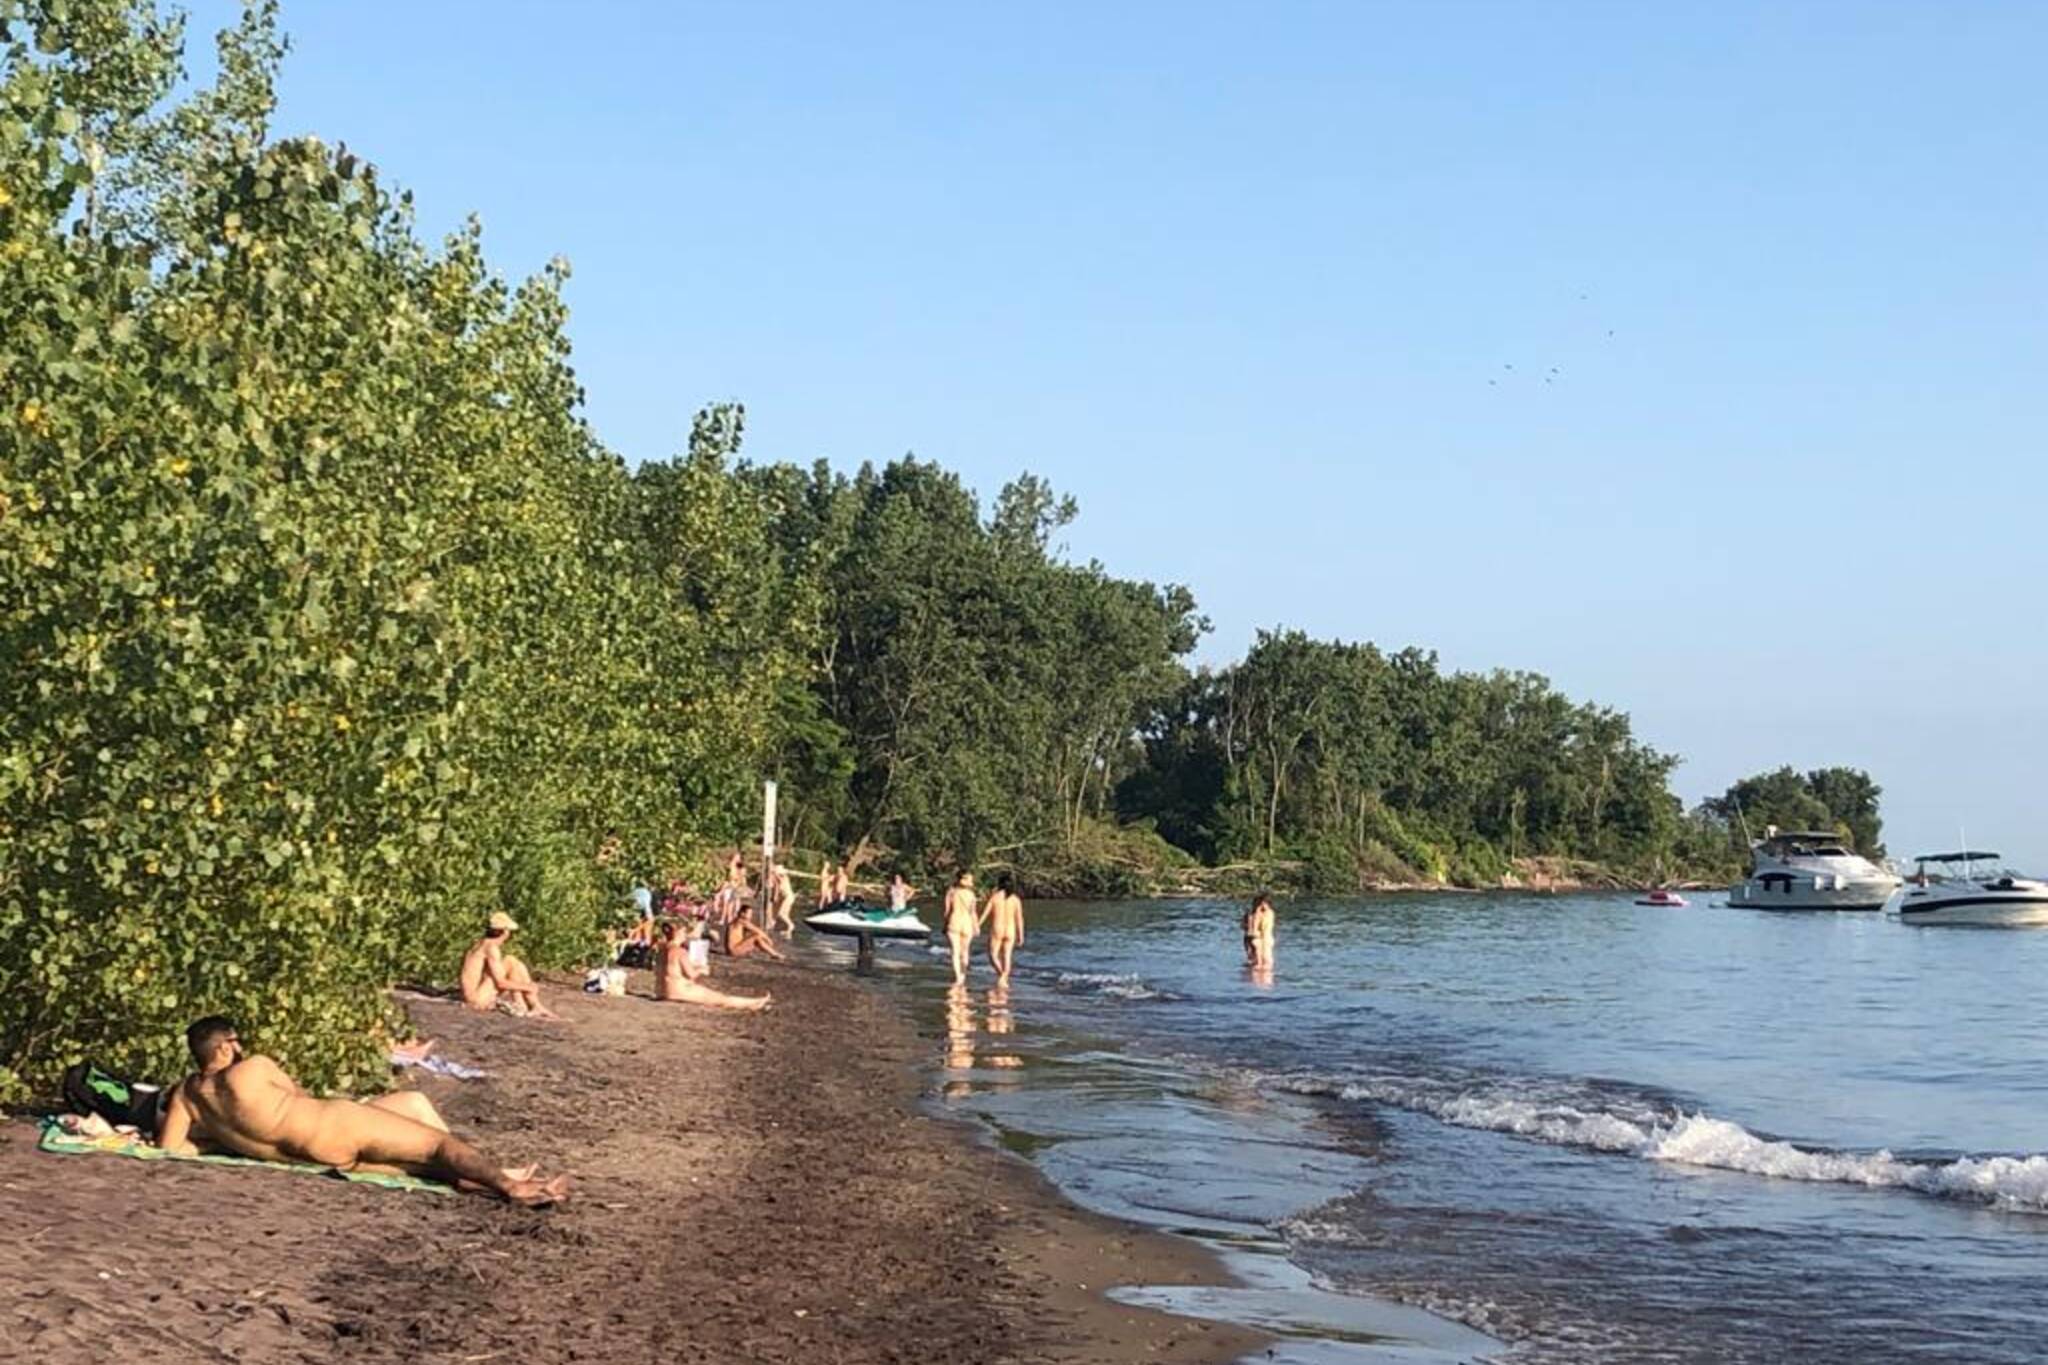 Naked Public Beach Dunes - Hanlan's Point is the Toronto Island's famous nude beach